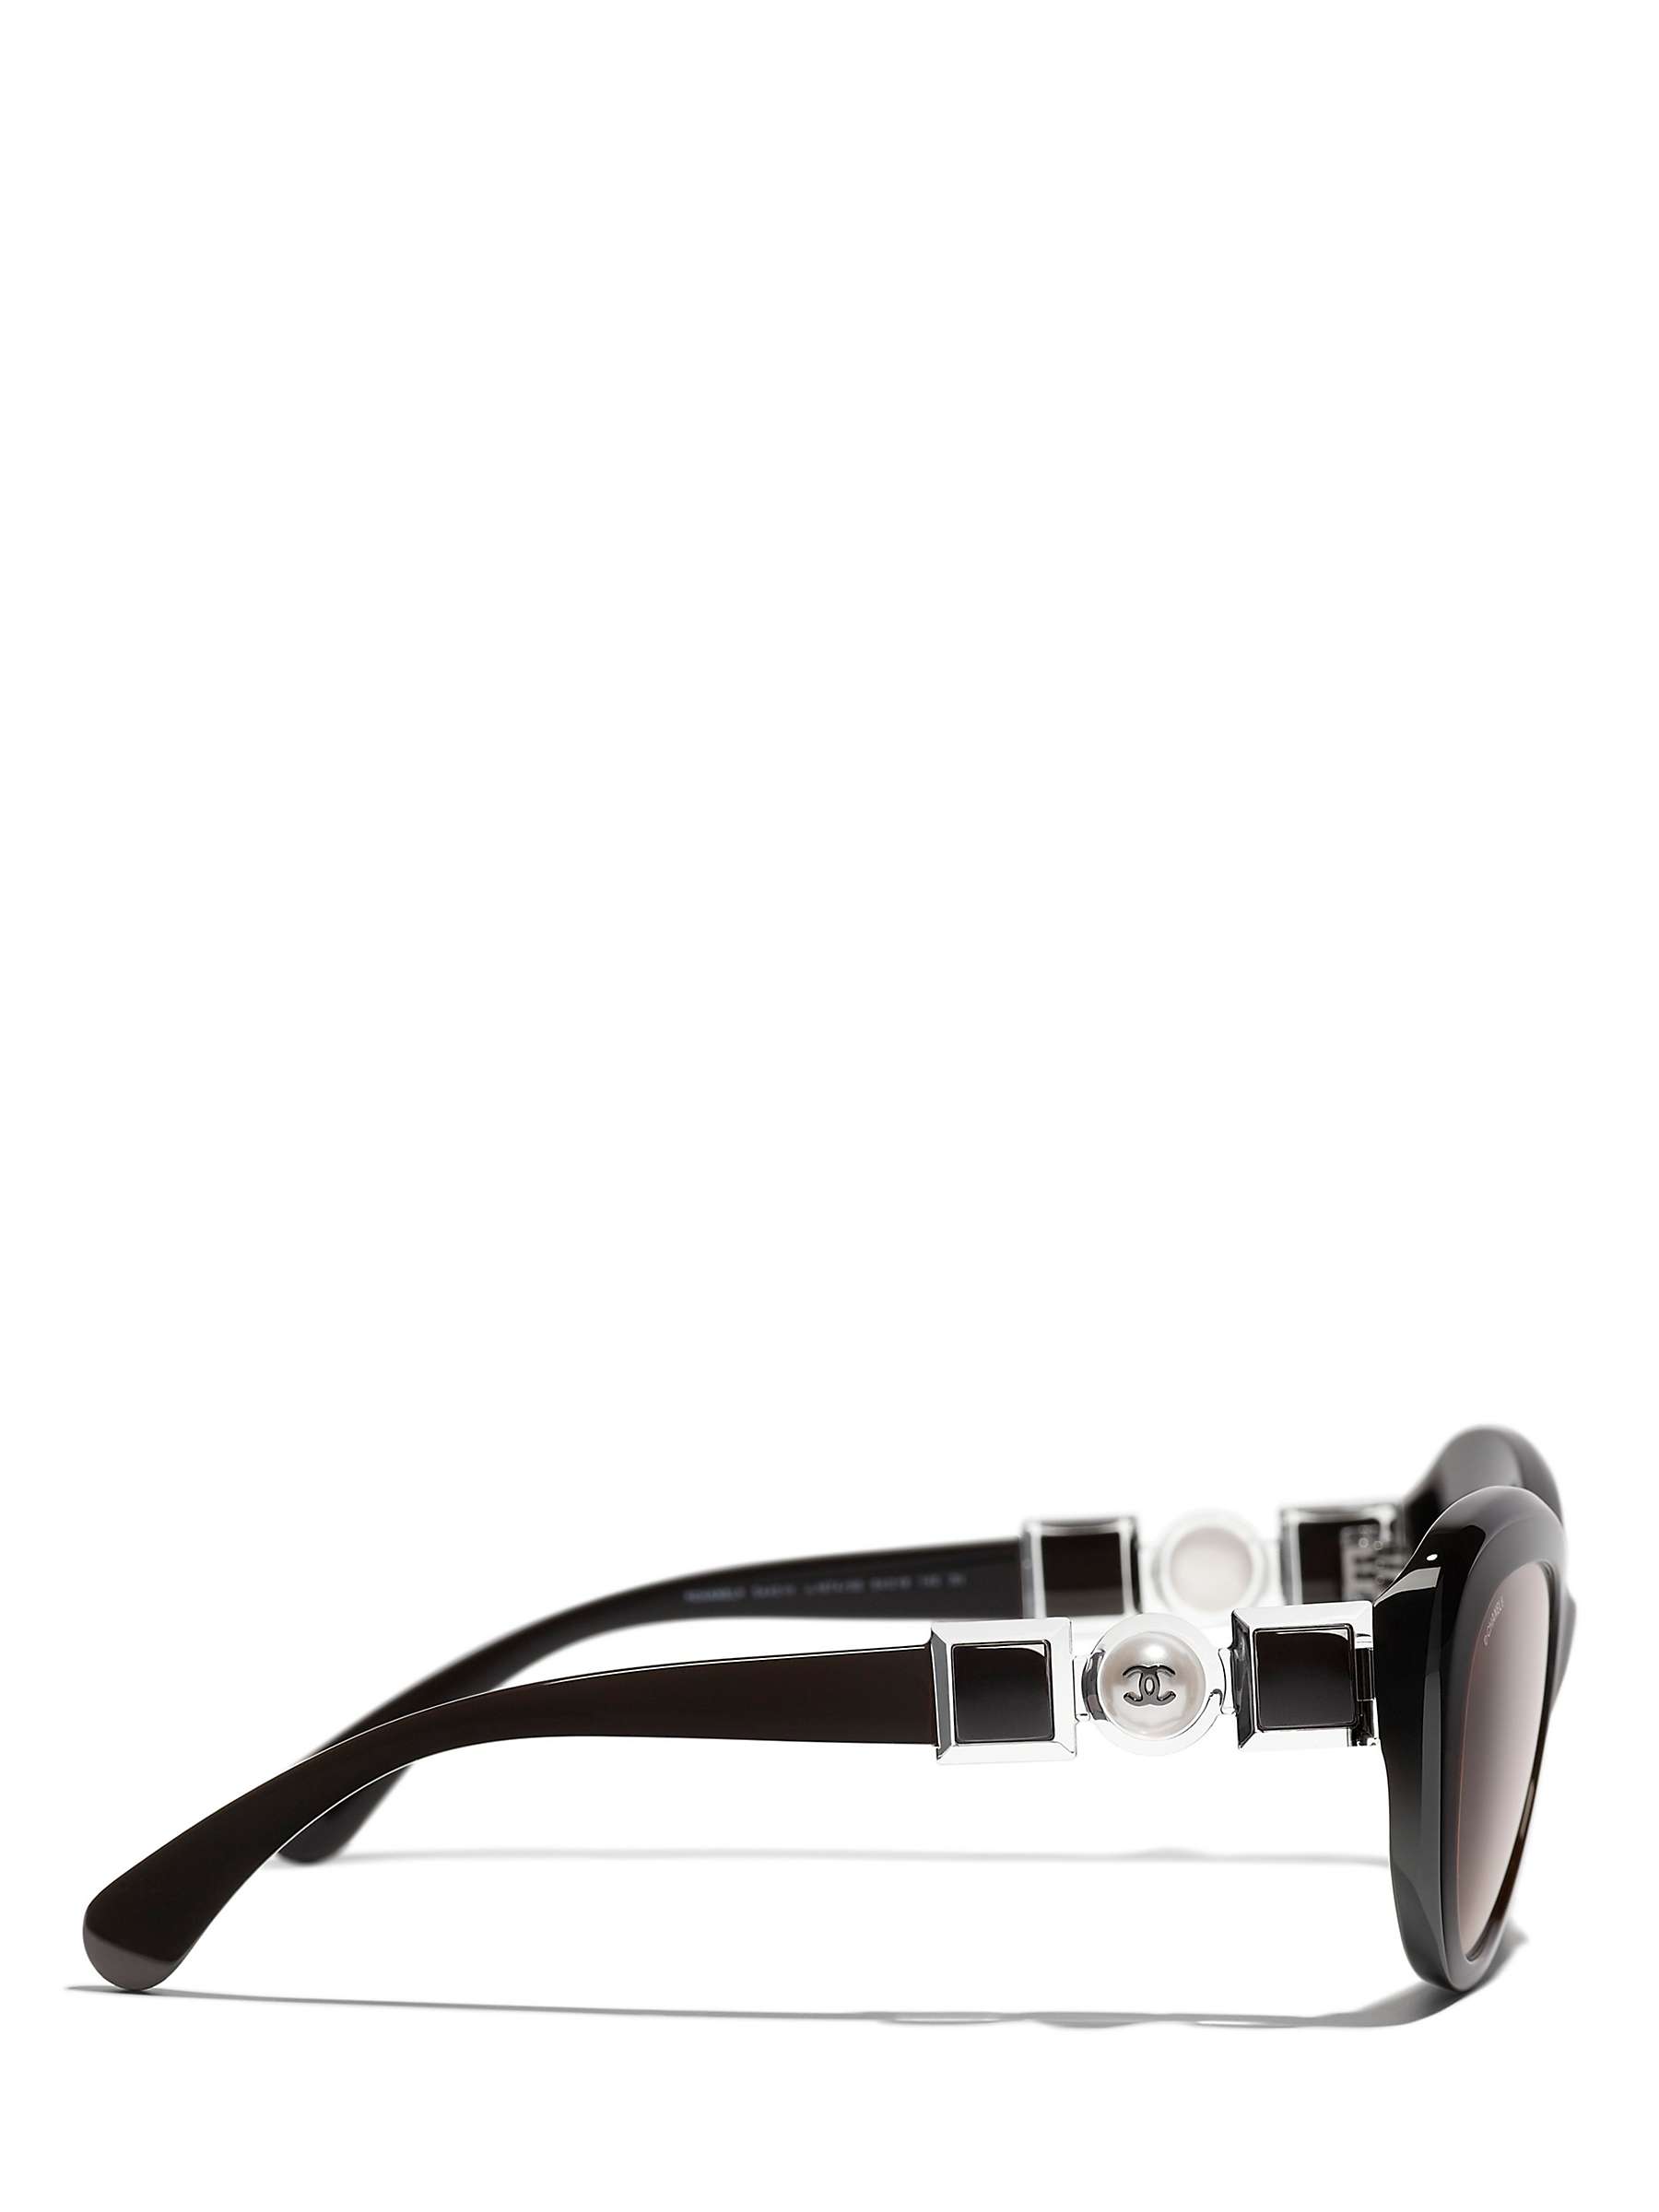 Buy CHANEL Cat Eye Sunglasses CH5443H Dark Brown/Brown Gradient Online at johnlewis.com